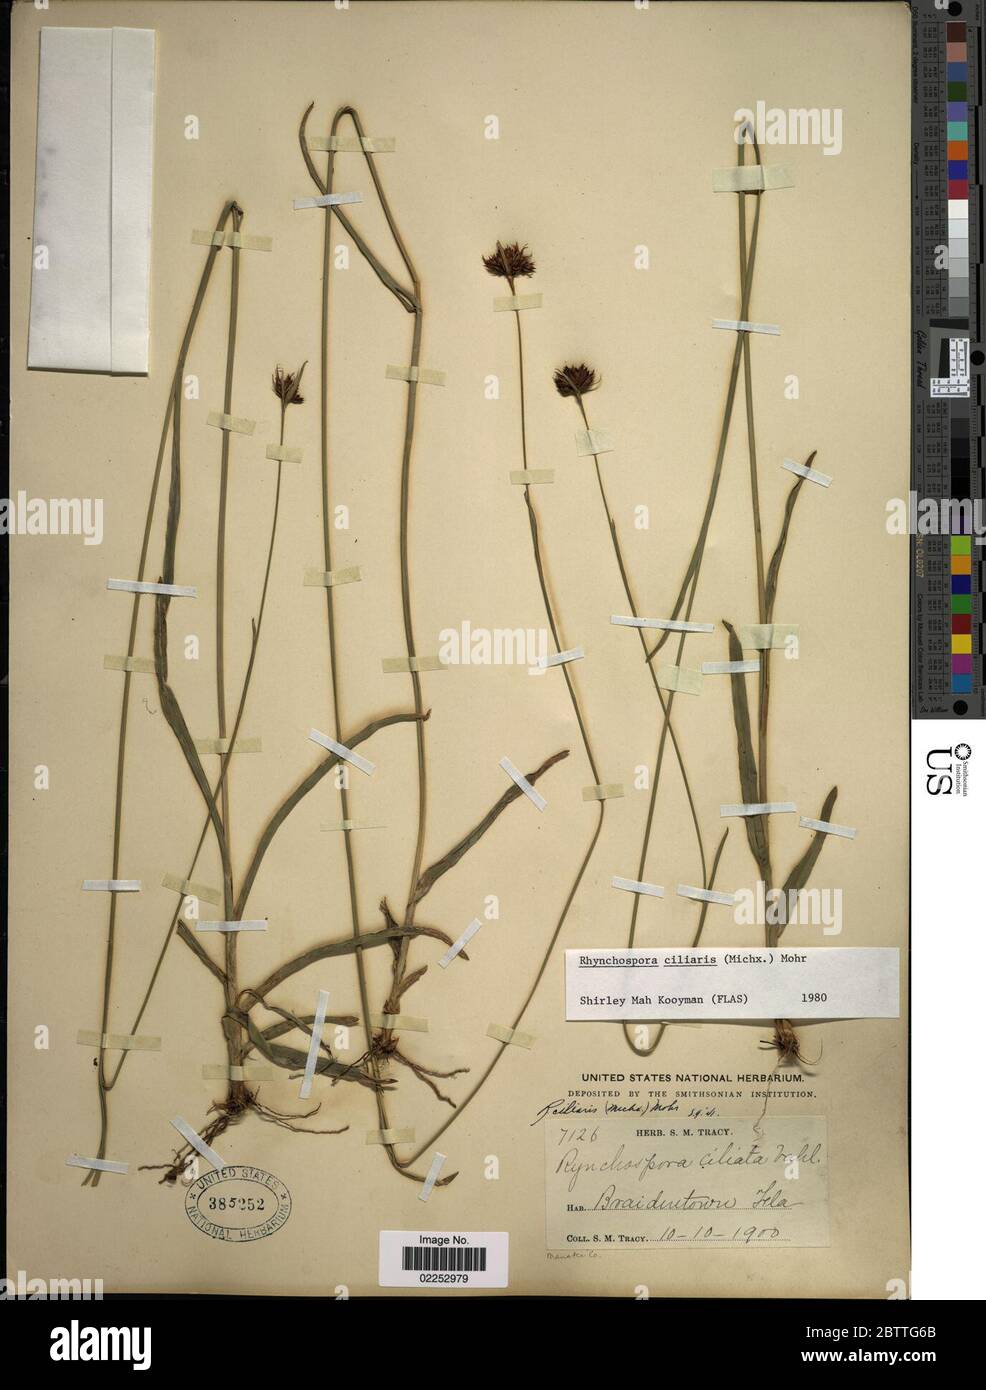 Rhynchospora ciliaris Michx C Mohr. Stock Photo